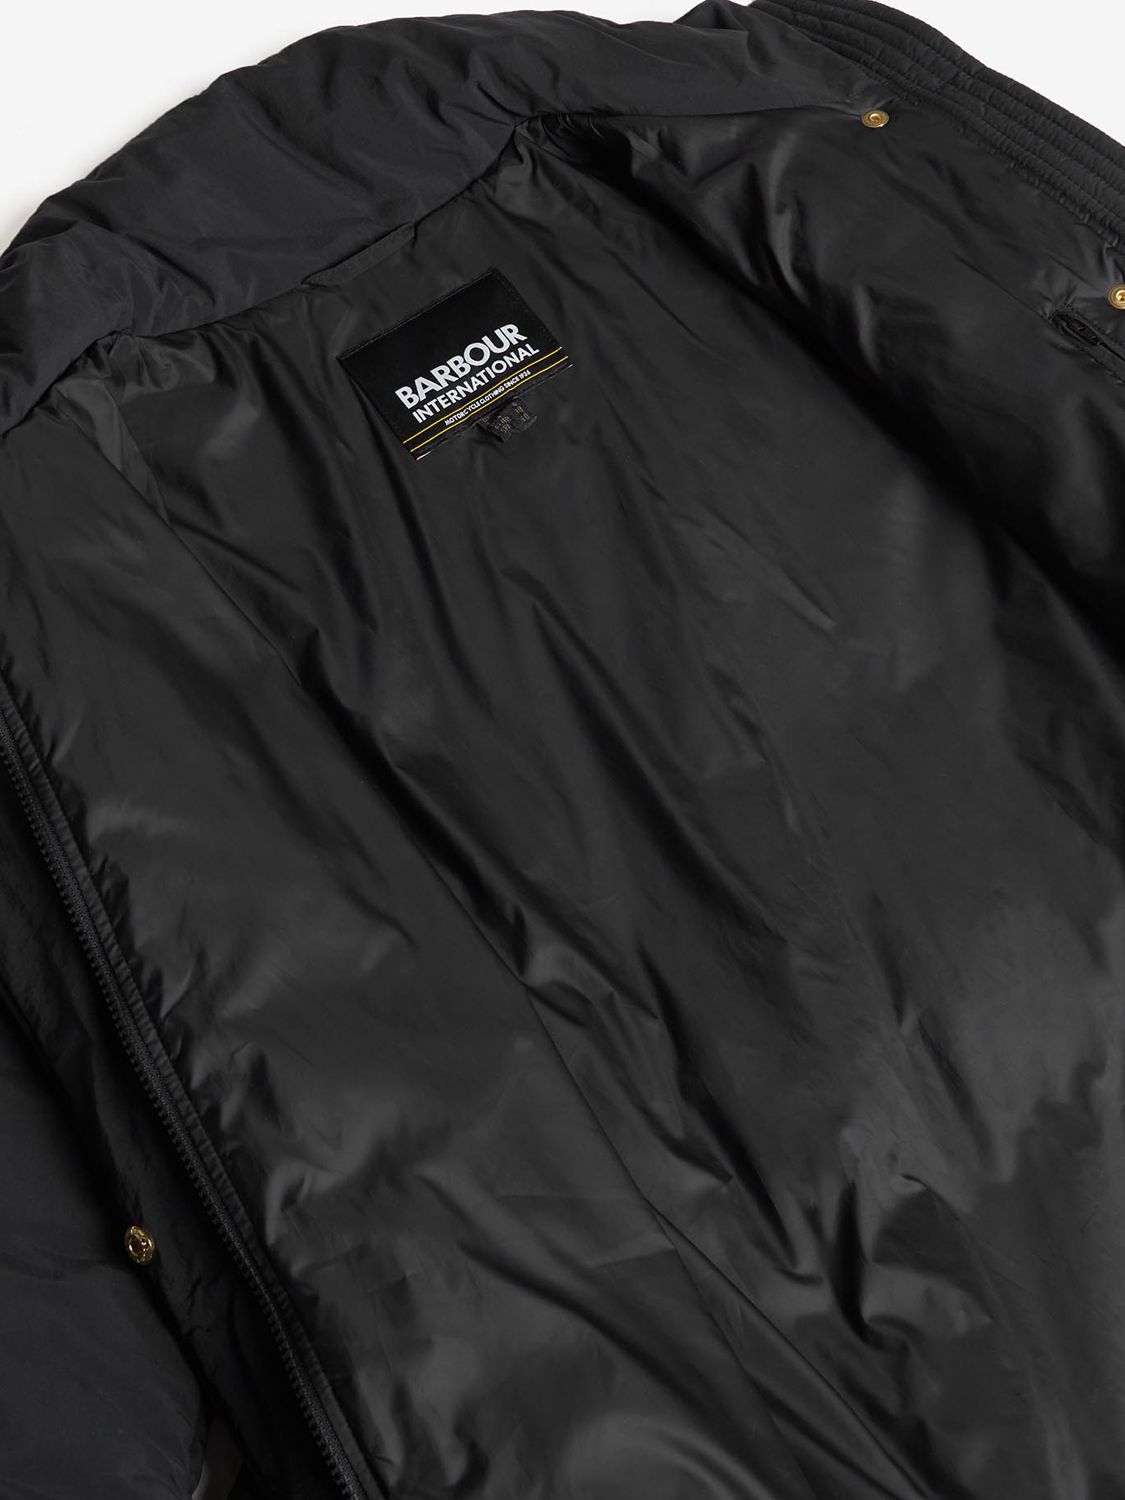 Barbour International Velocete Showerproof Jacket, Black, 8